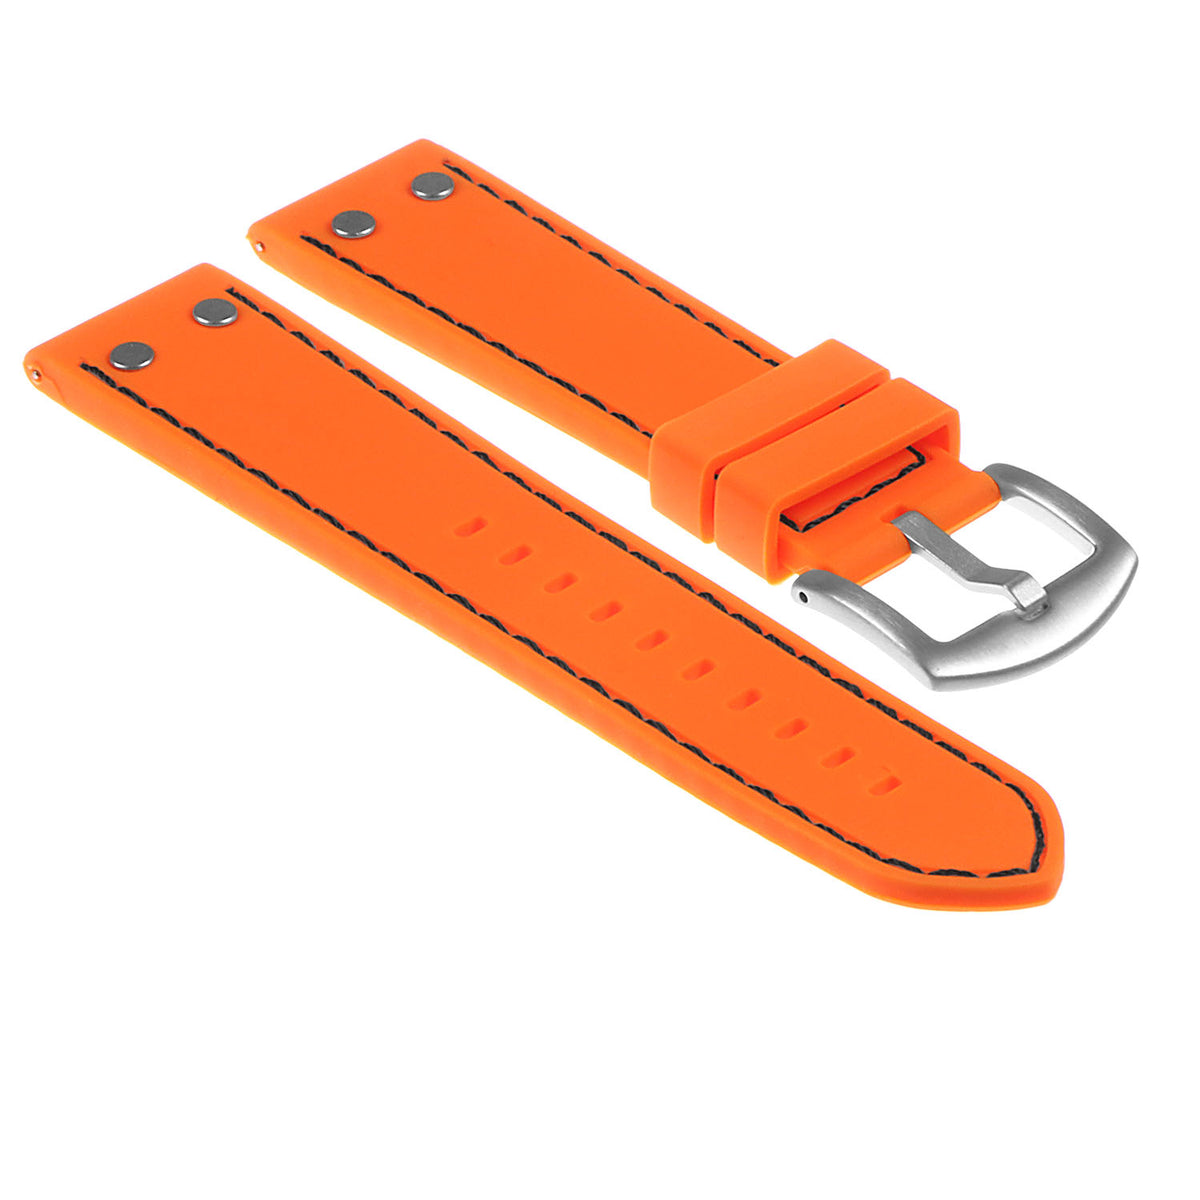 STRAPSCO - Rubber aviator strap with rivets – quick release